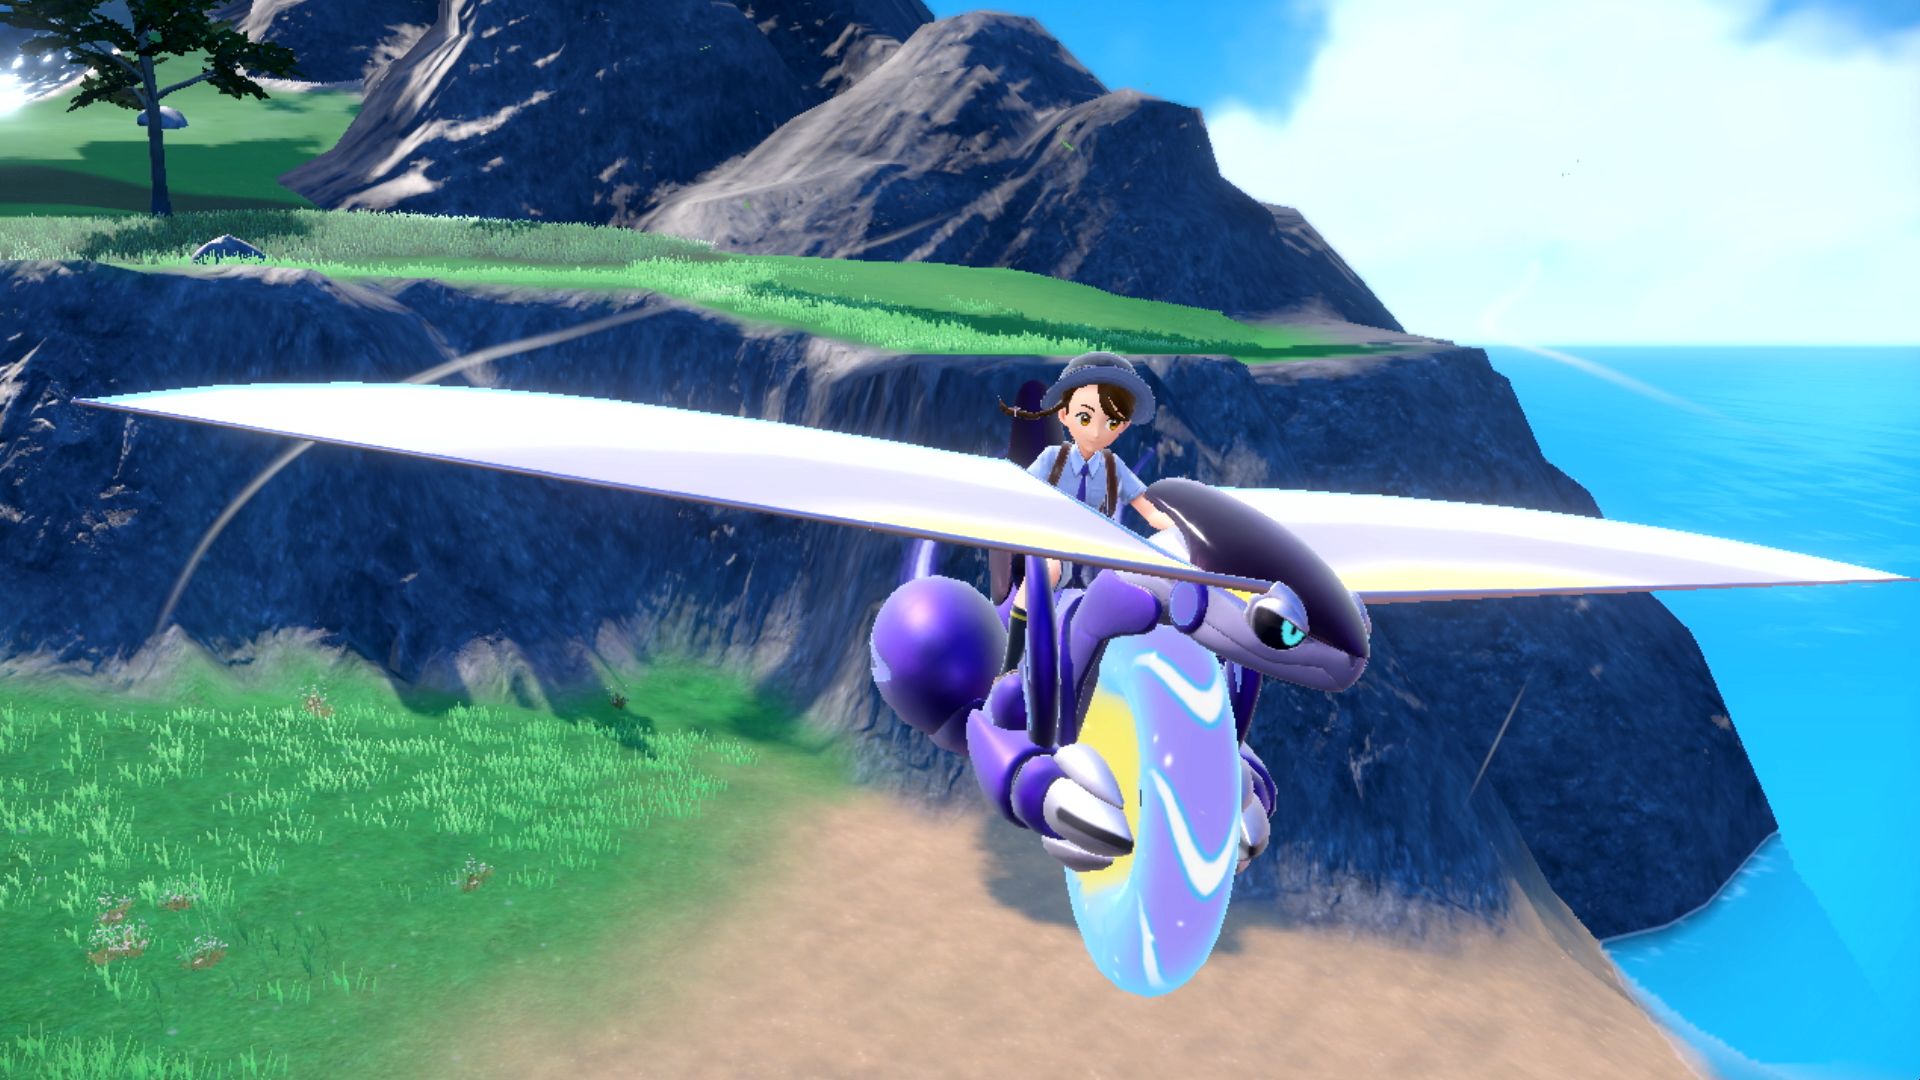 Player gliding on Miraidon